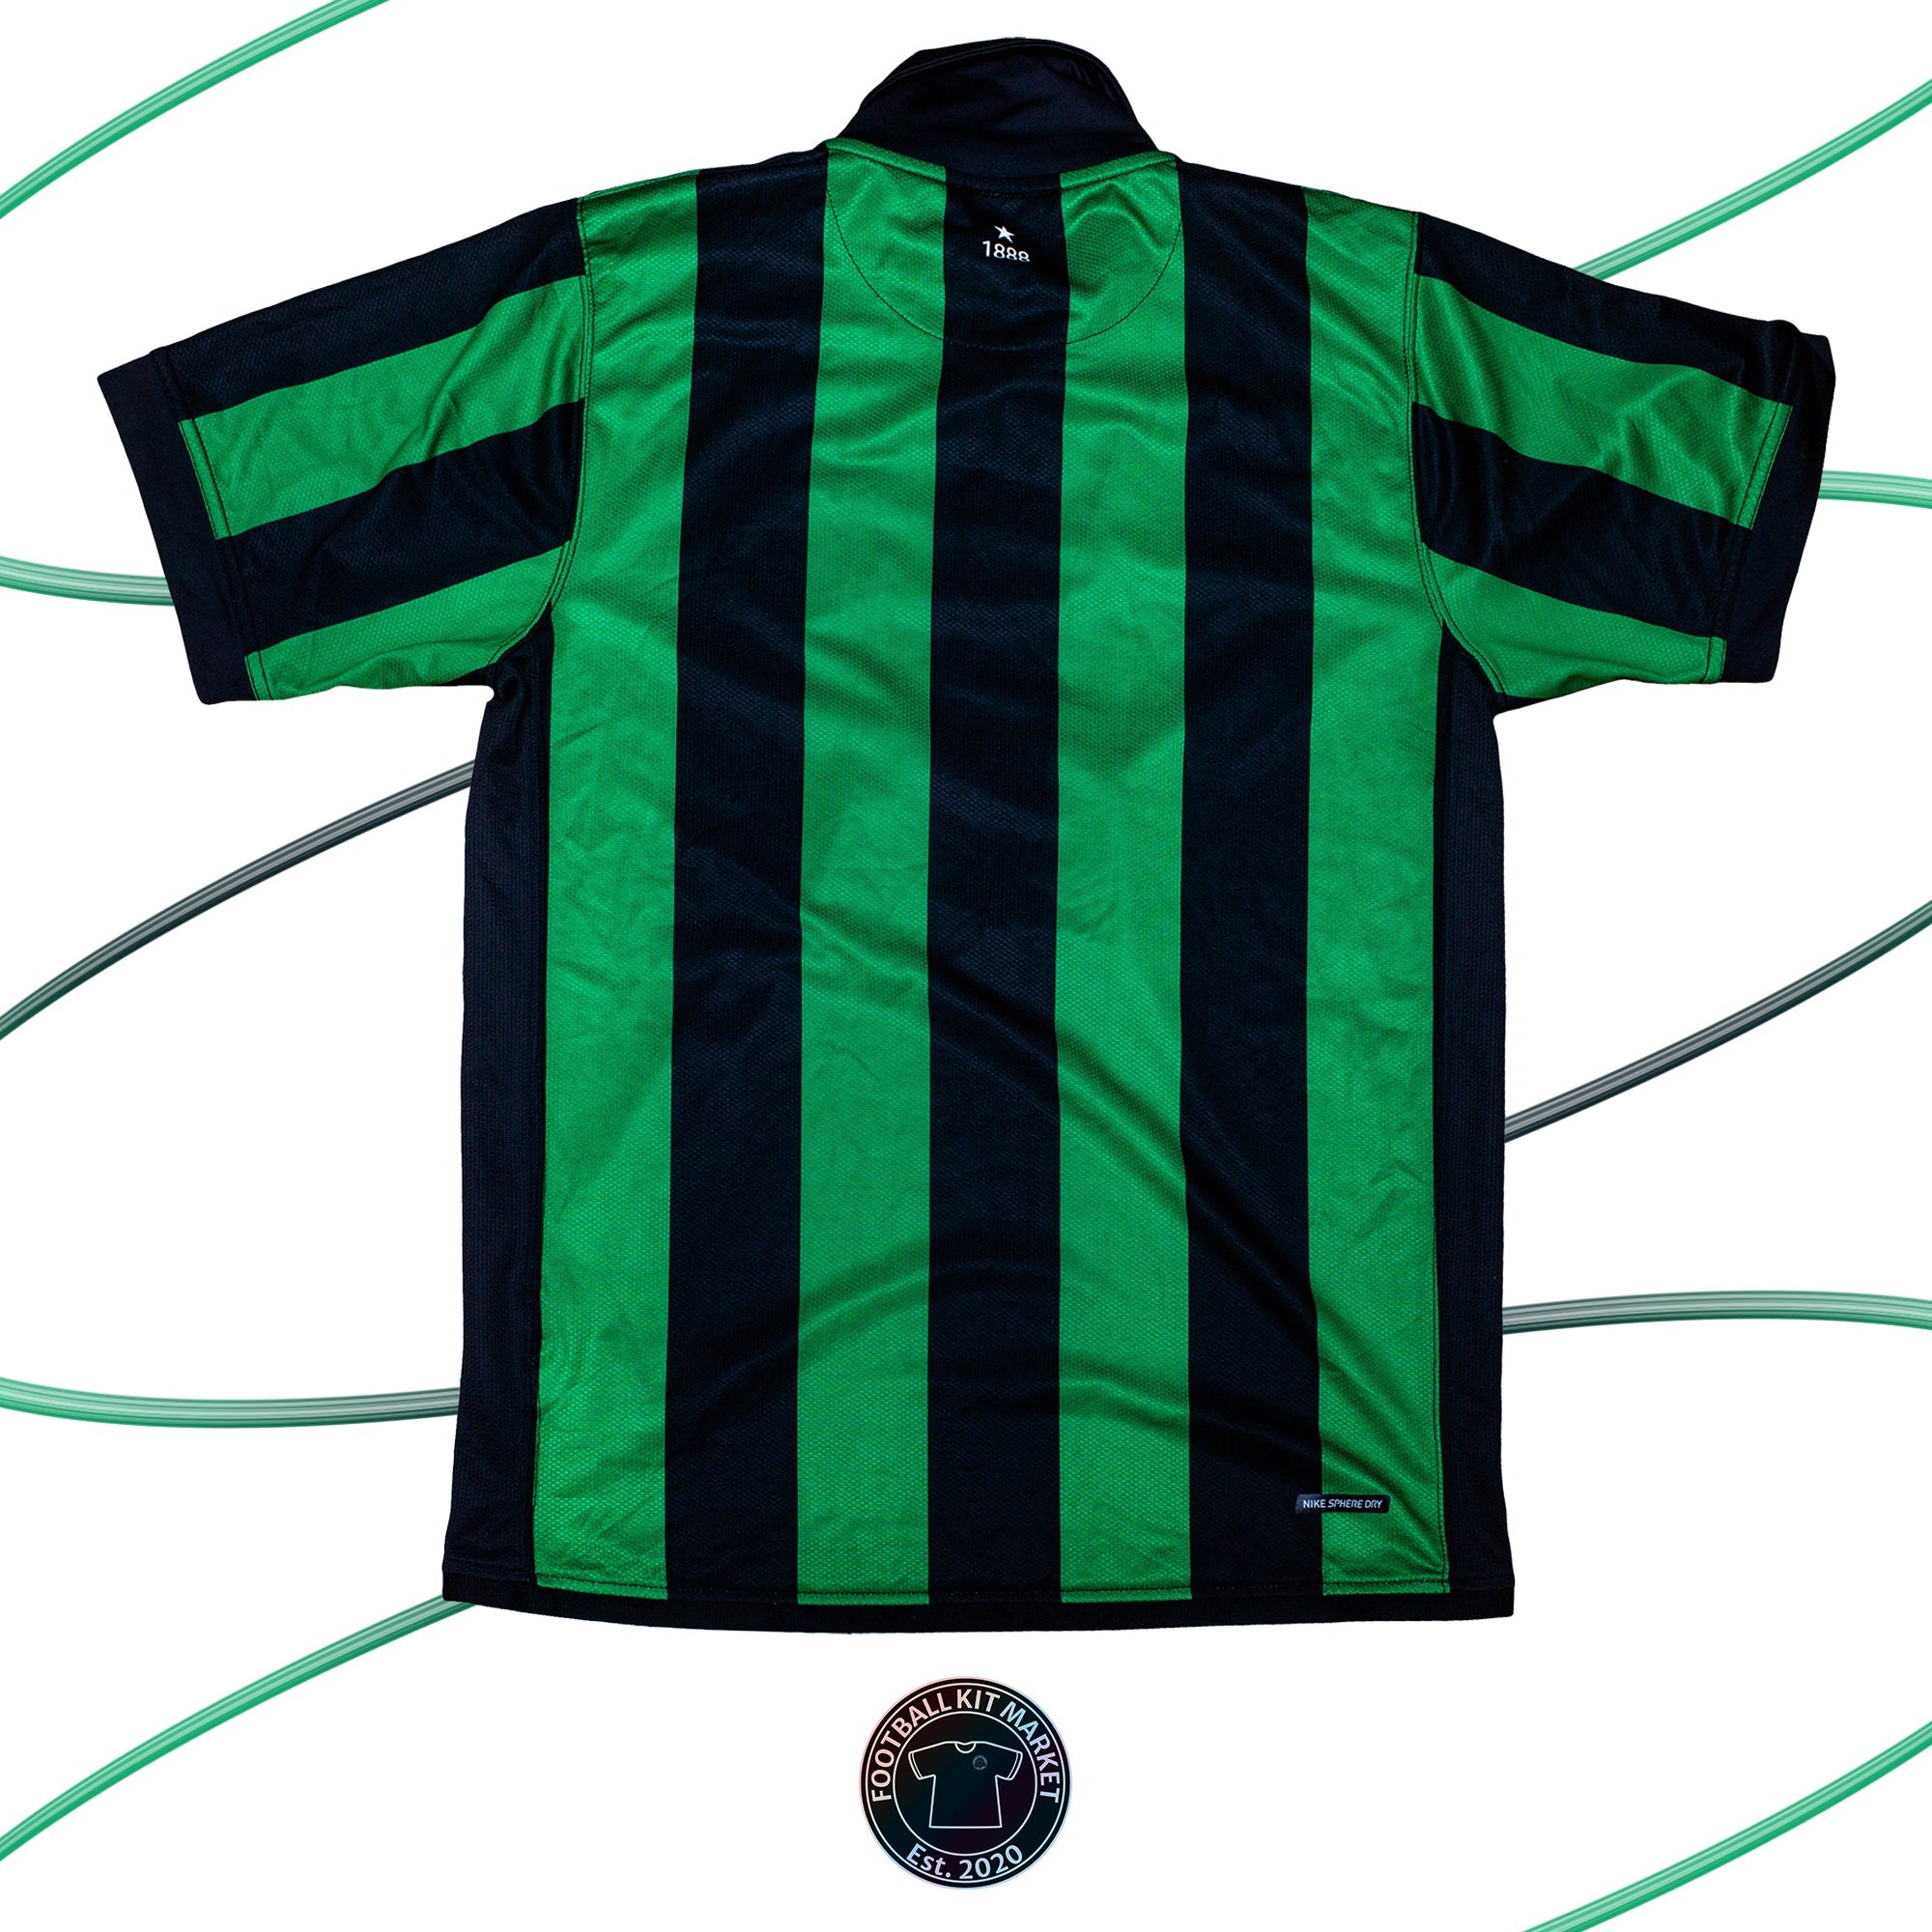 Genuine CELTIC Away Shirt (2006-2007) - NIKE (M) - Product Image from Football Kit Market